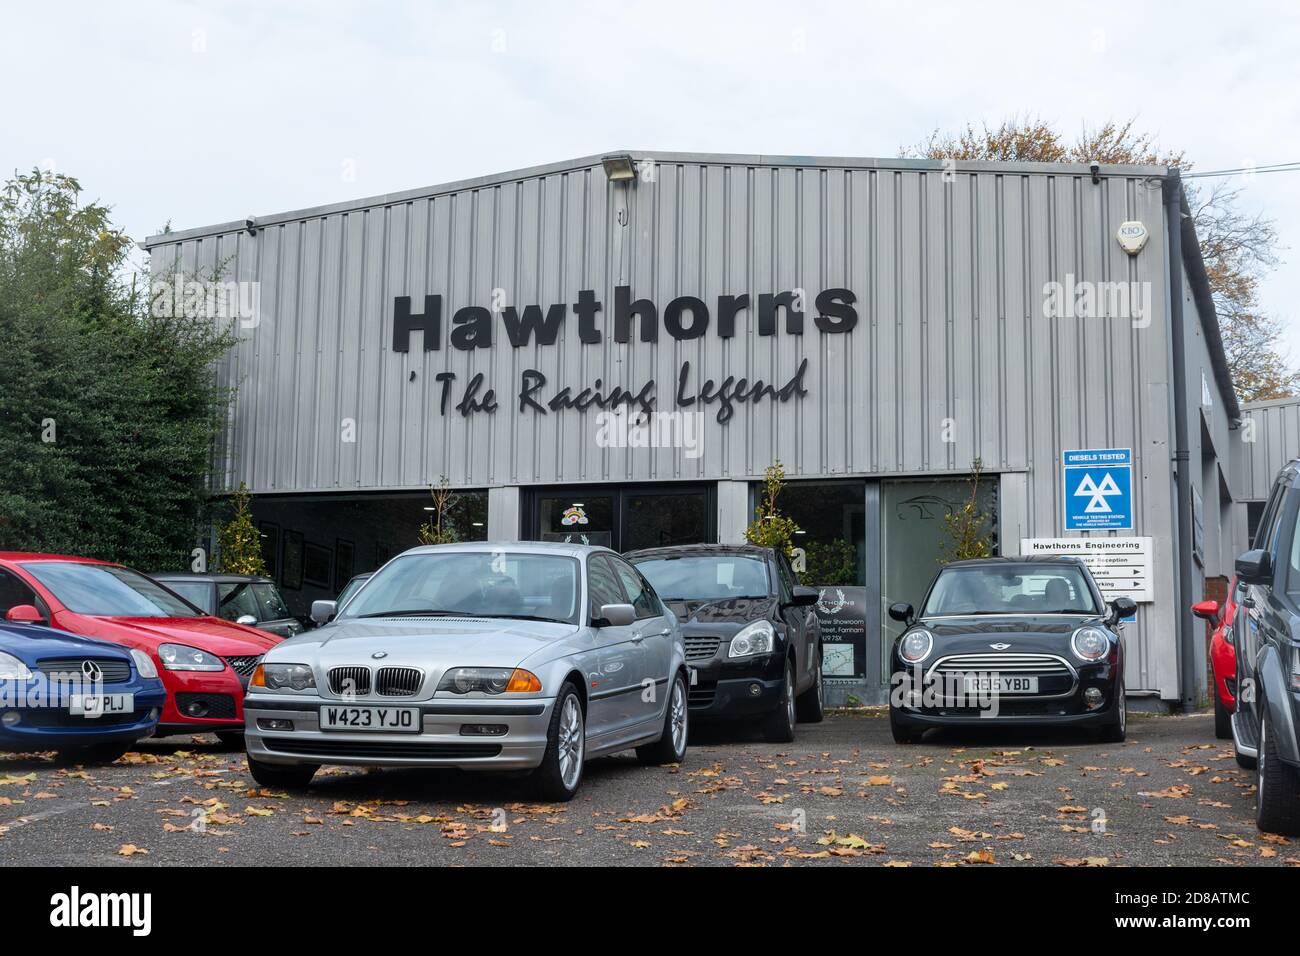 Hawthorns The Racing Legend garage and car sales business in Farnham, Surrey, UK Stock Photo